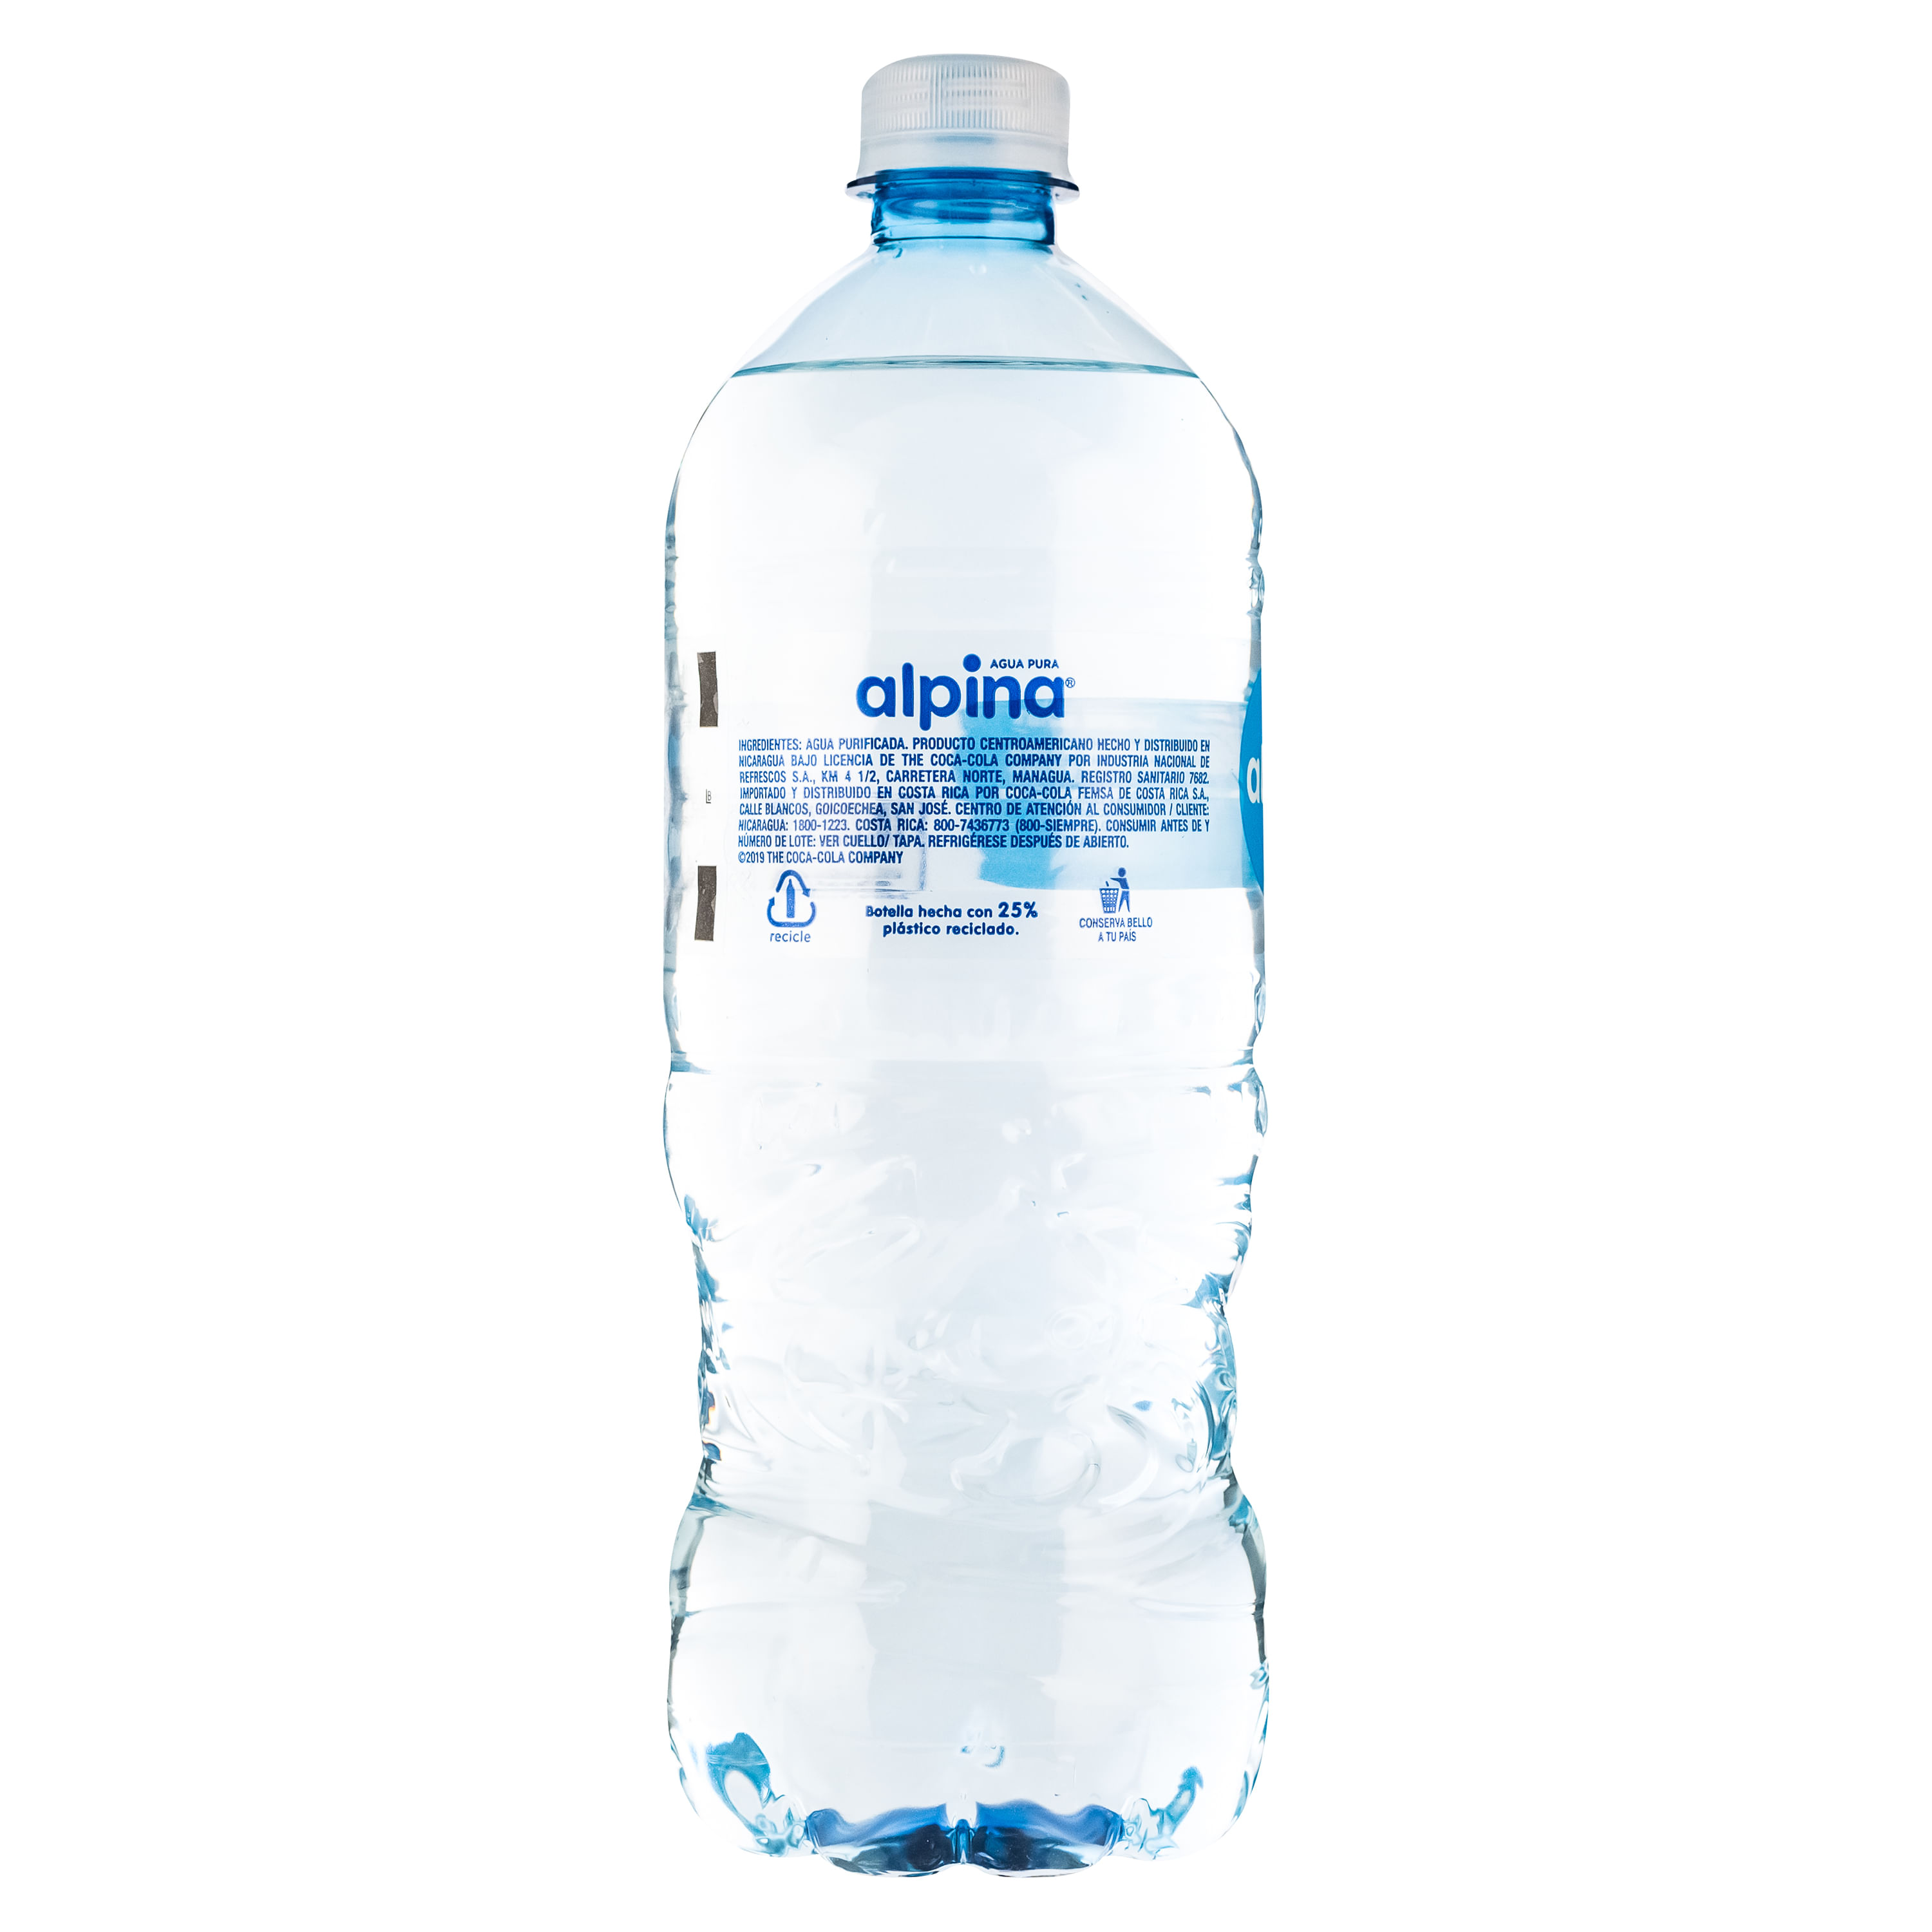 Agua Natural Cristal 500 ml